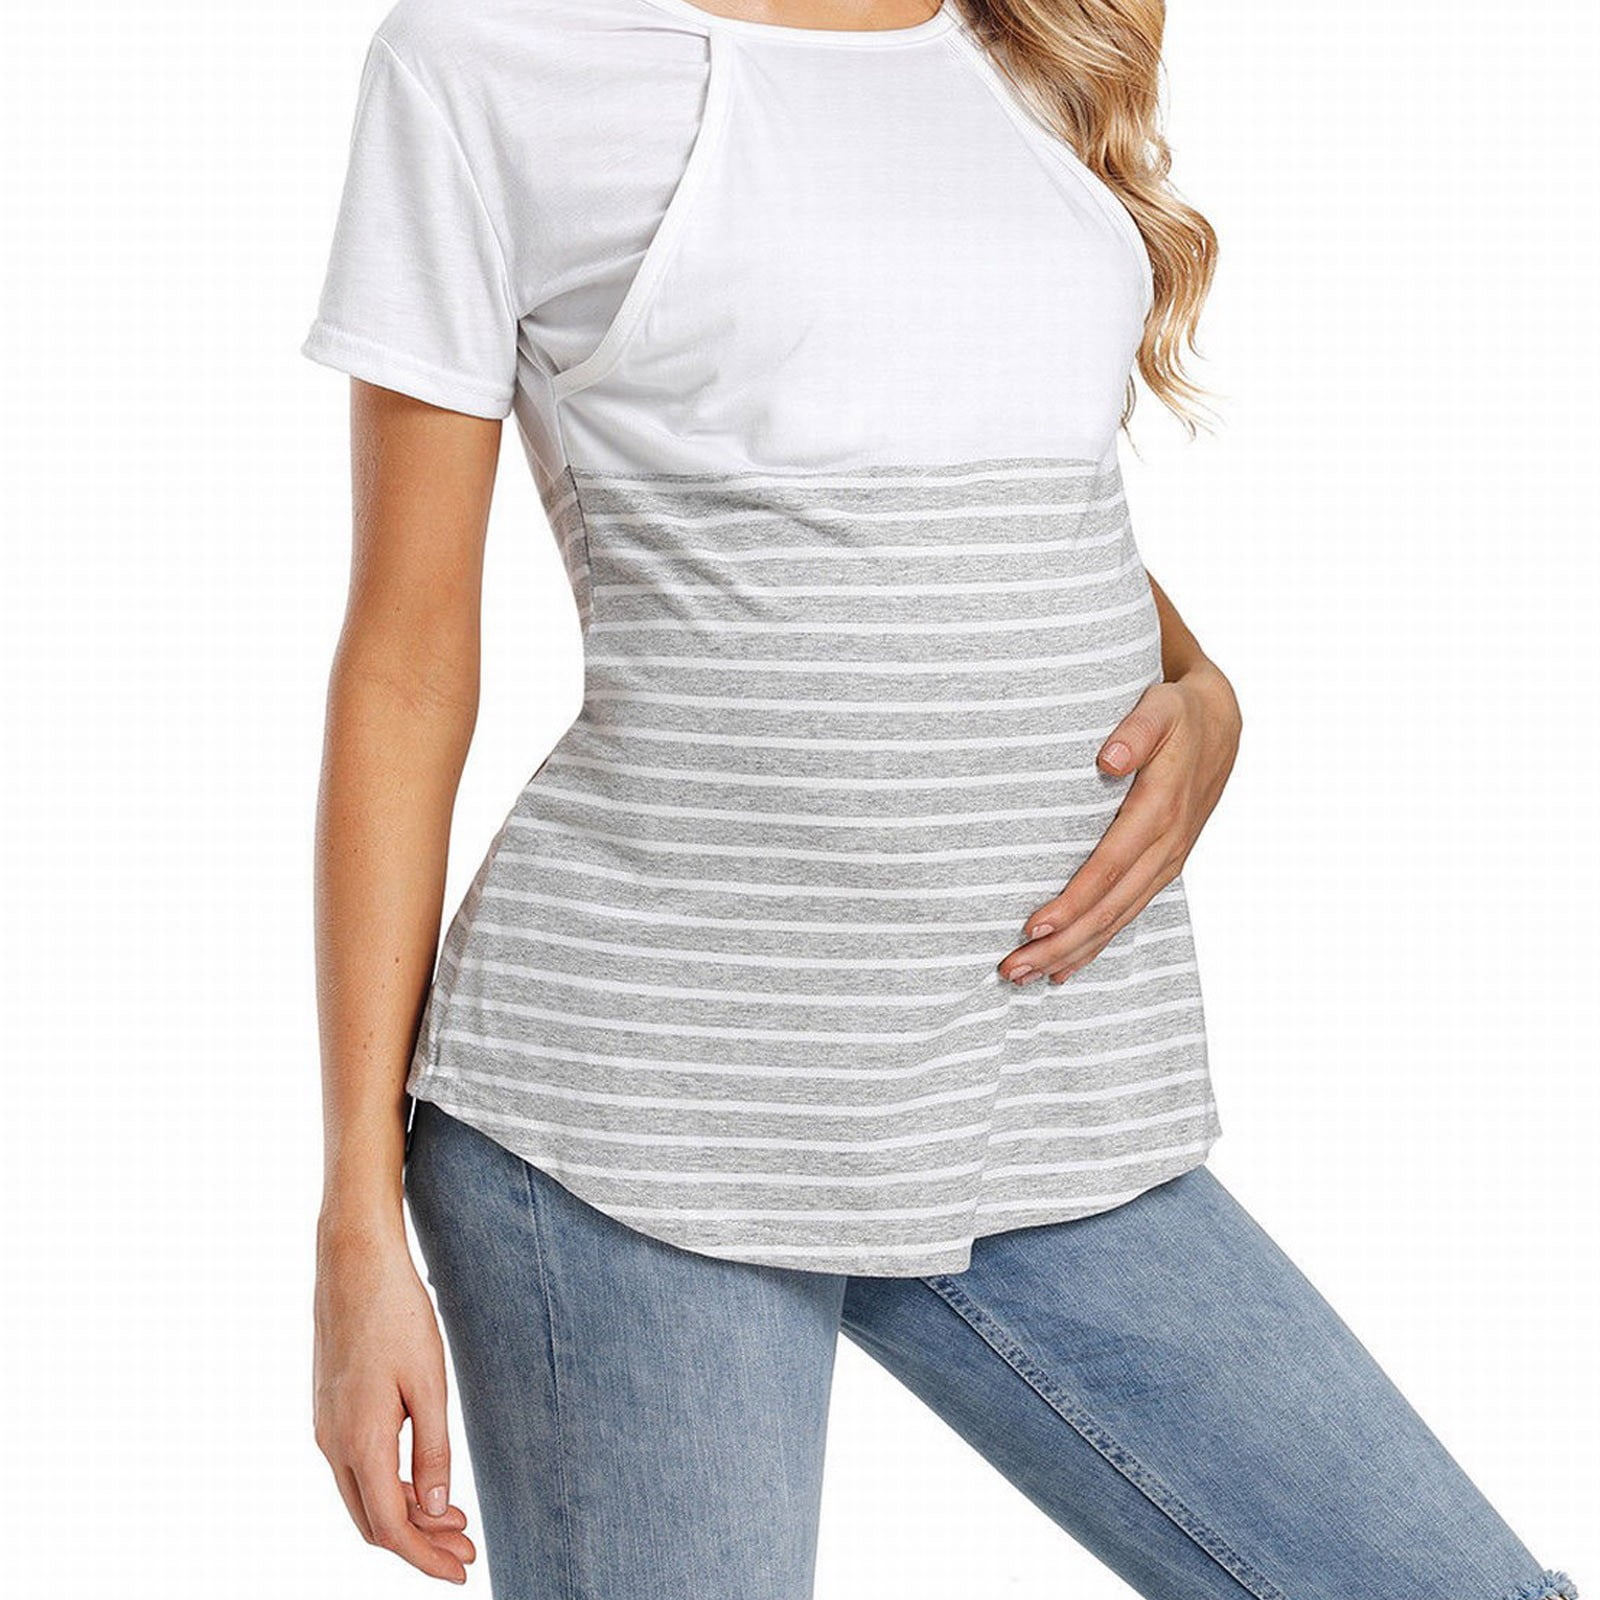 WAJCSHFS Maternity Clothes Plus Size Women's Maternity Peplum Blouse Top  with Empire Waist Pleat (Pink,XL) 